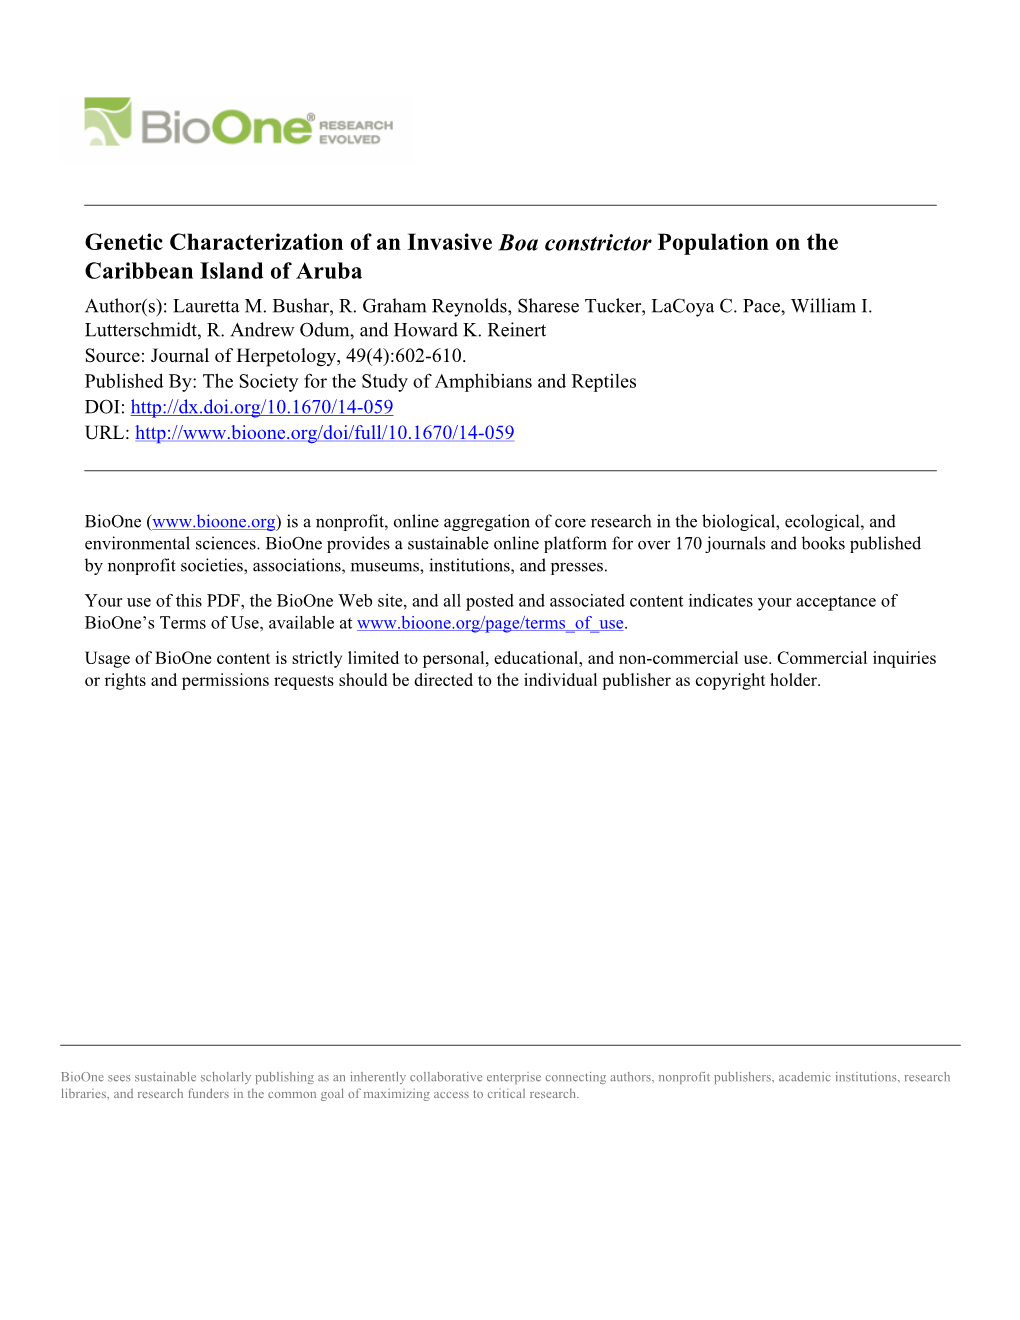 Genetic Characterization of an Invasive Boa Constrictor Population on the Caribbean Island of Aruba Author(S): Lauretta M